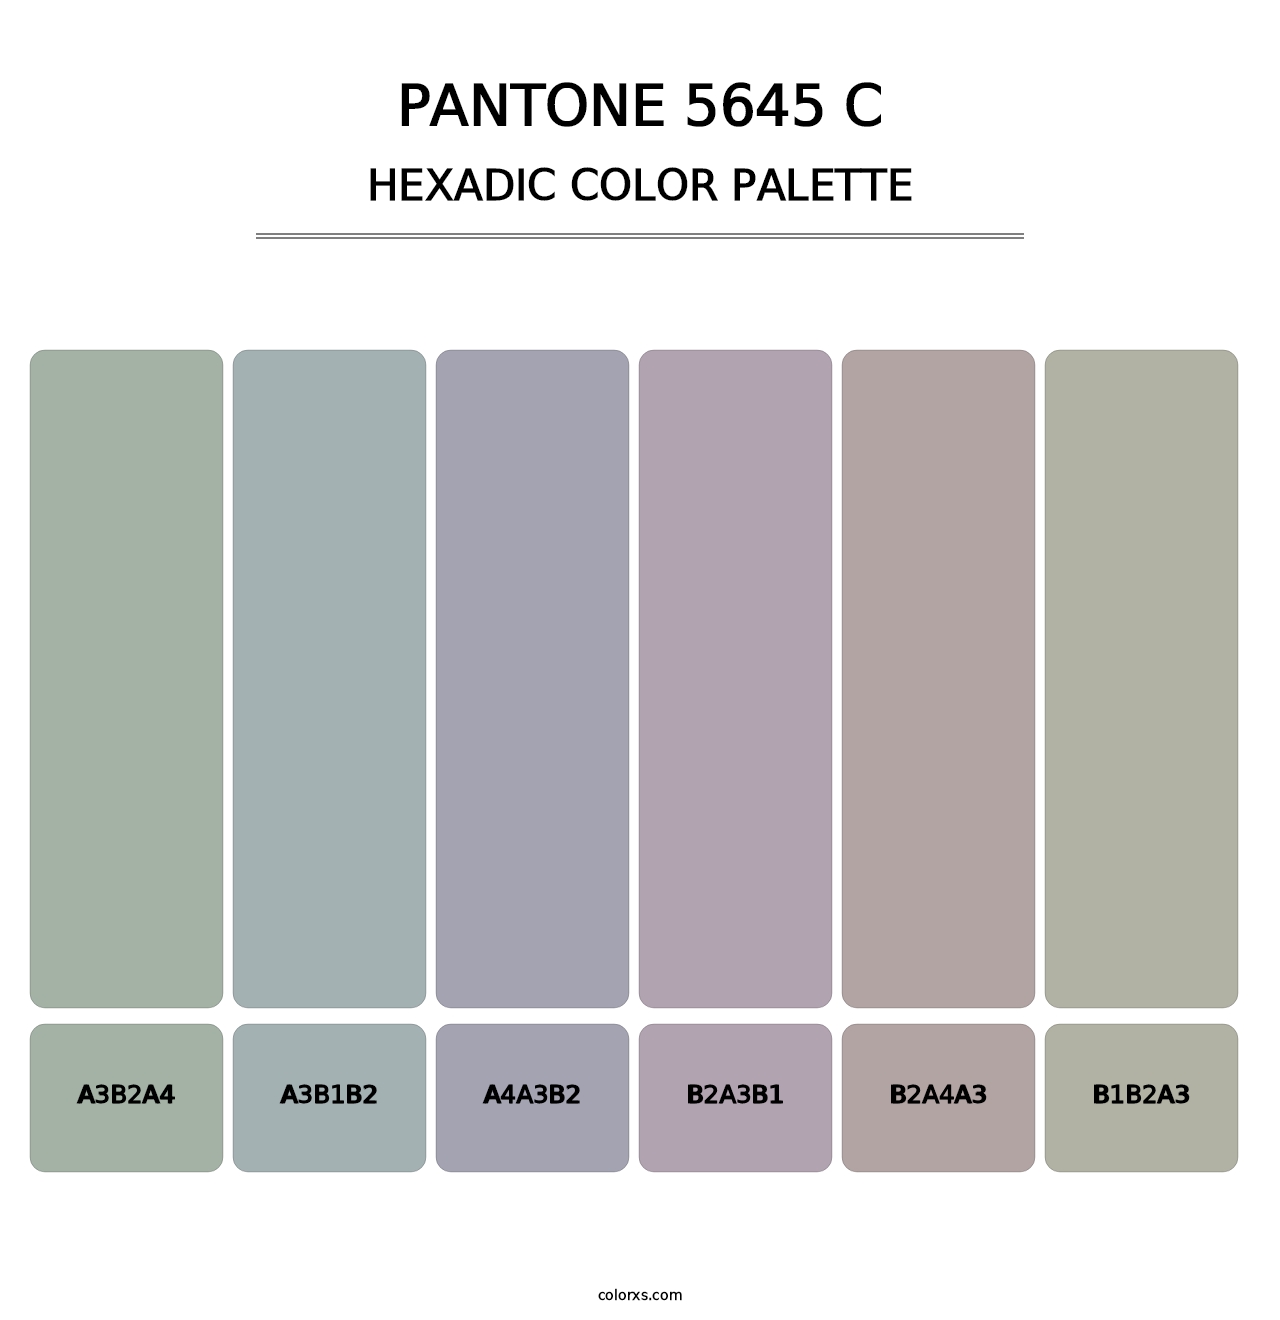 PANTONE 5645 C - Hexadic Color Palette